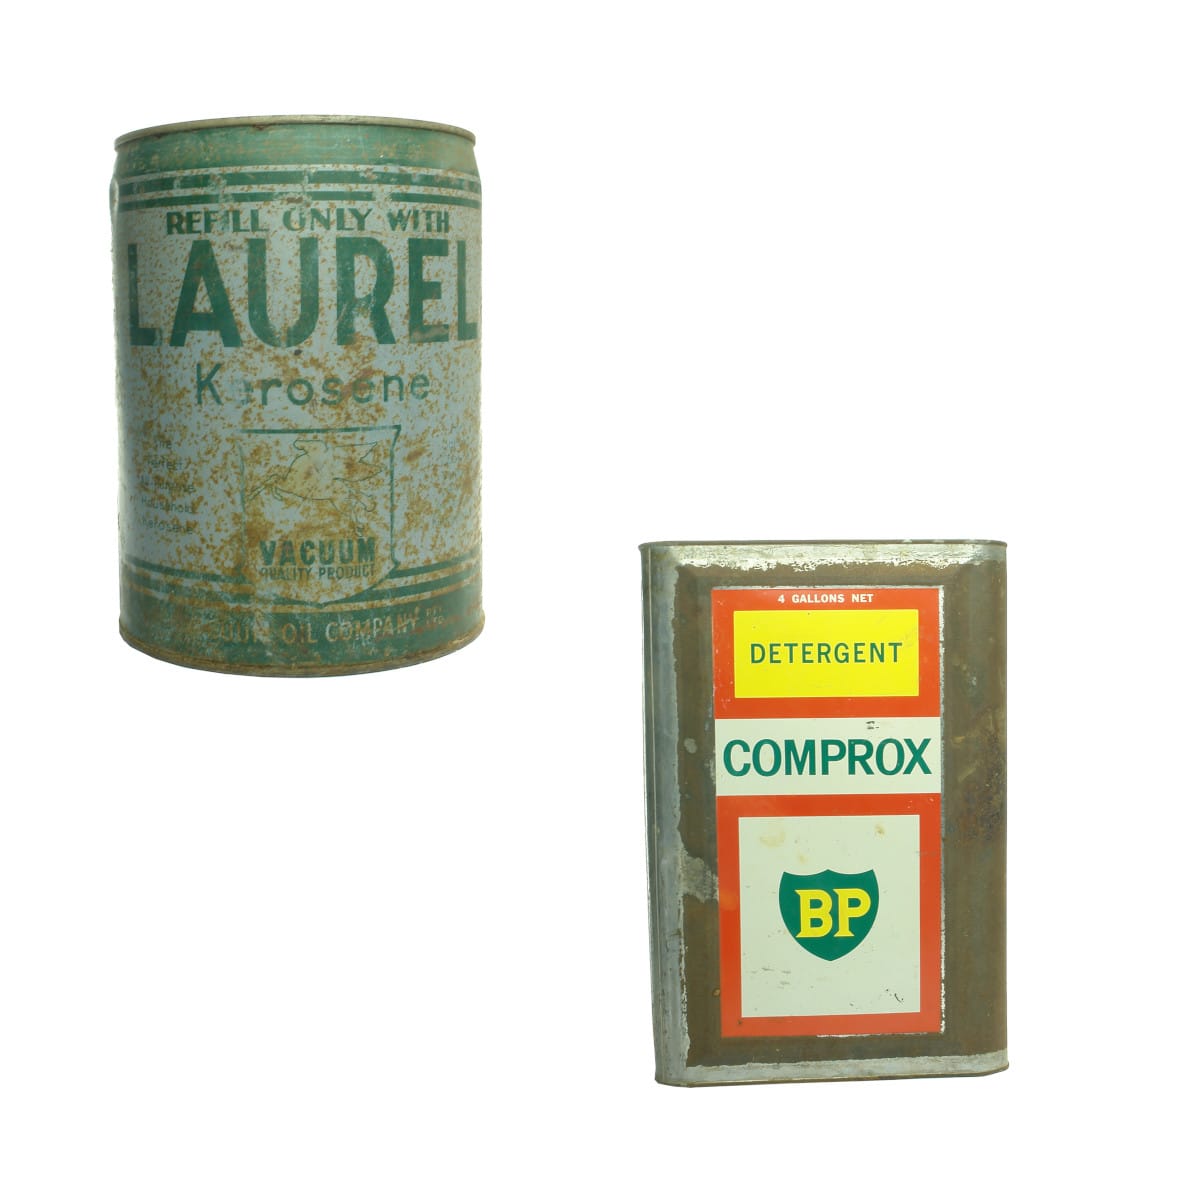 2 x 4 Gallon Tins: Vacuum Oil Company Laurel Kerosene and BP Comprox Detergent. (PICKUP ONLY)